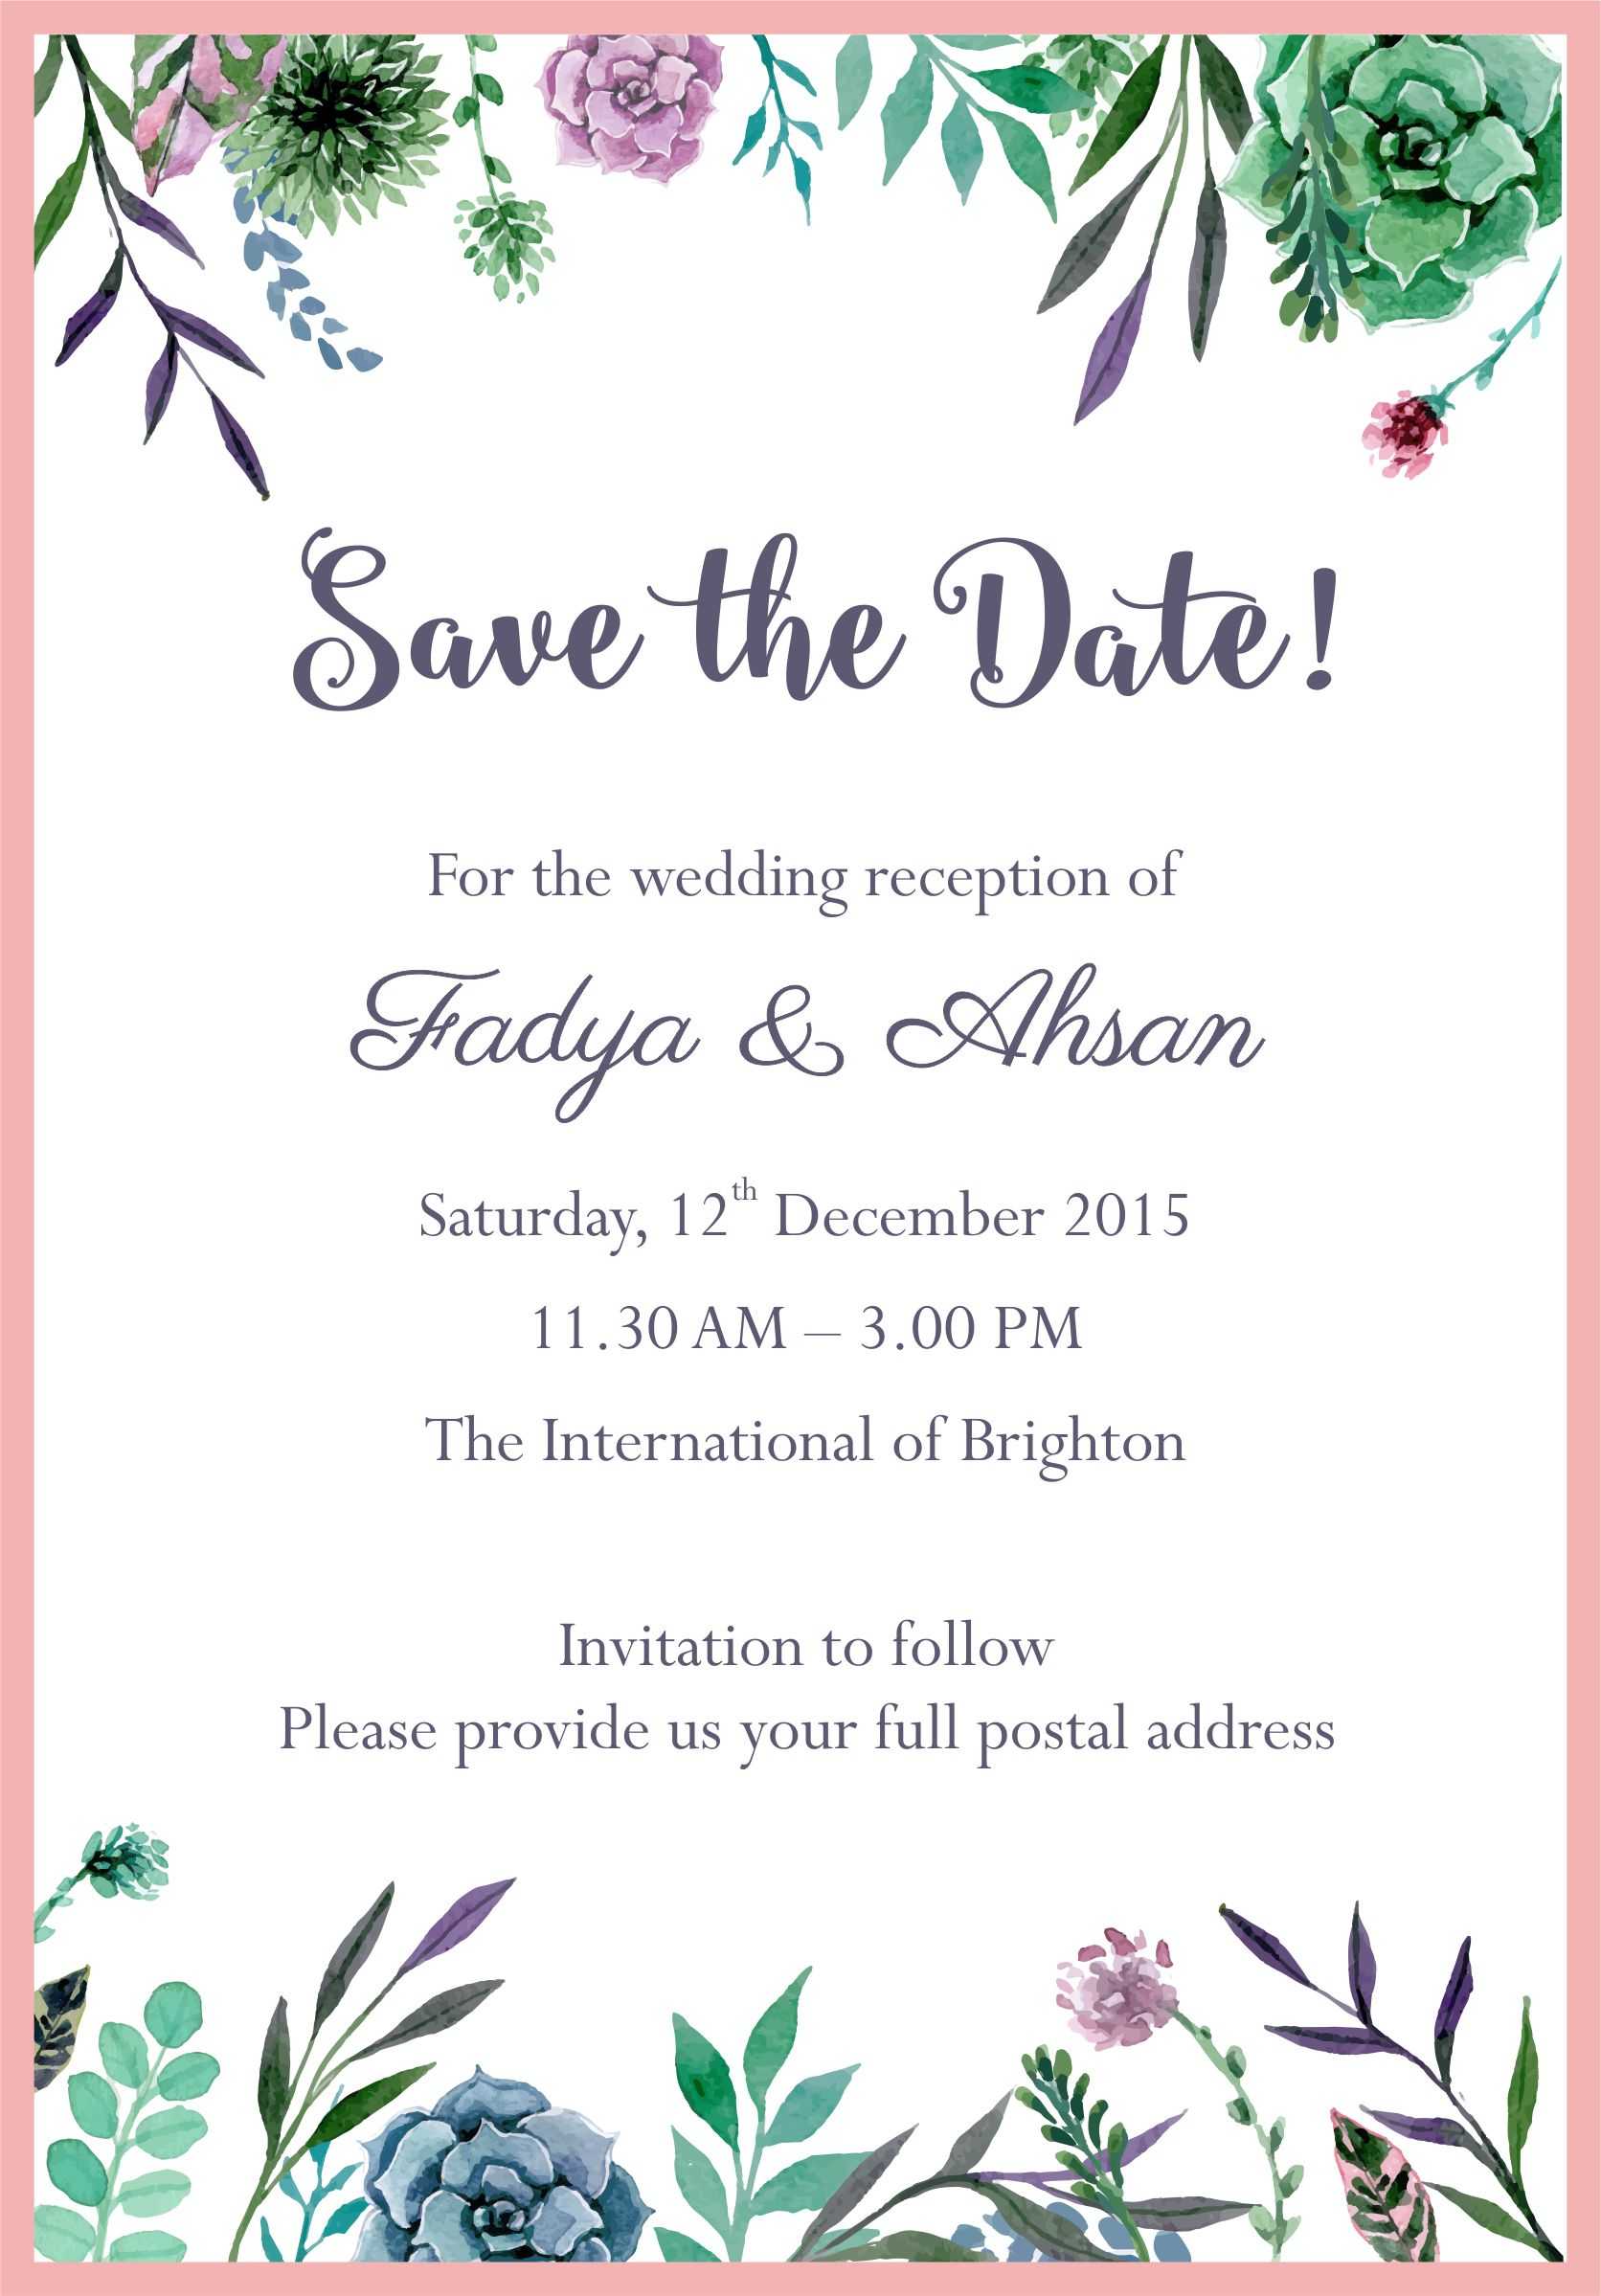 Free Email Wedding Invitation Design - Veppe With Free E Wedding Invitation Card Templates